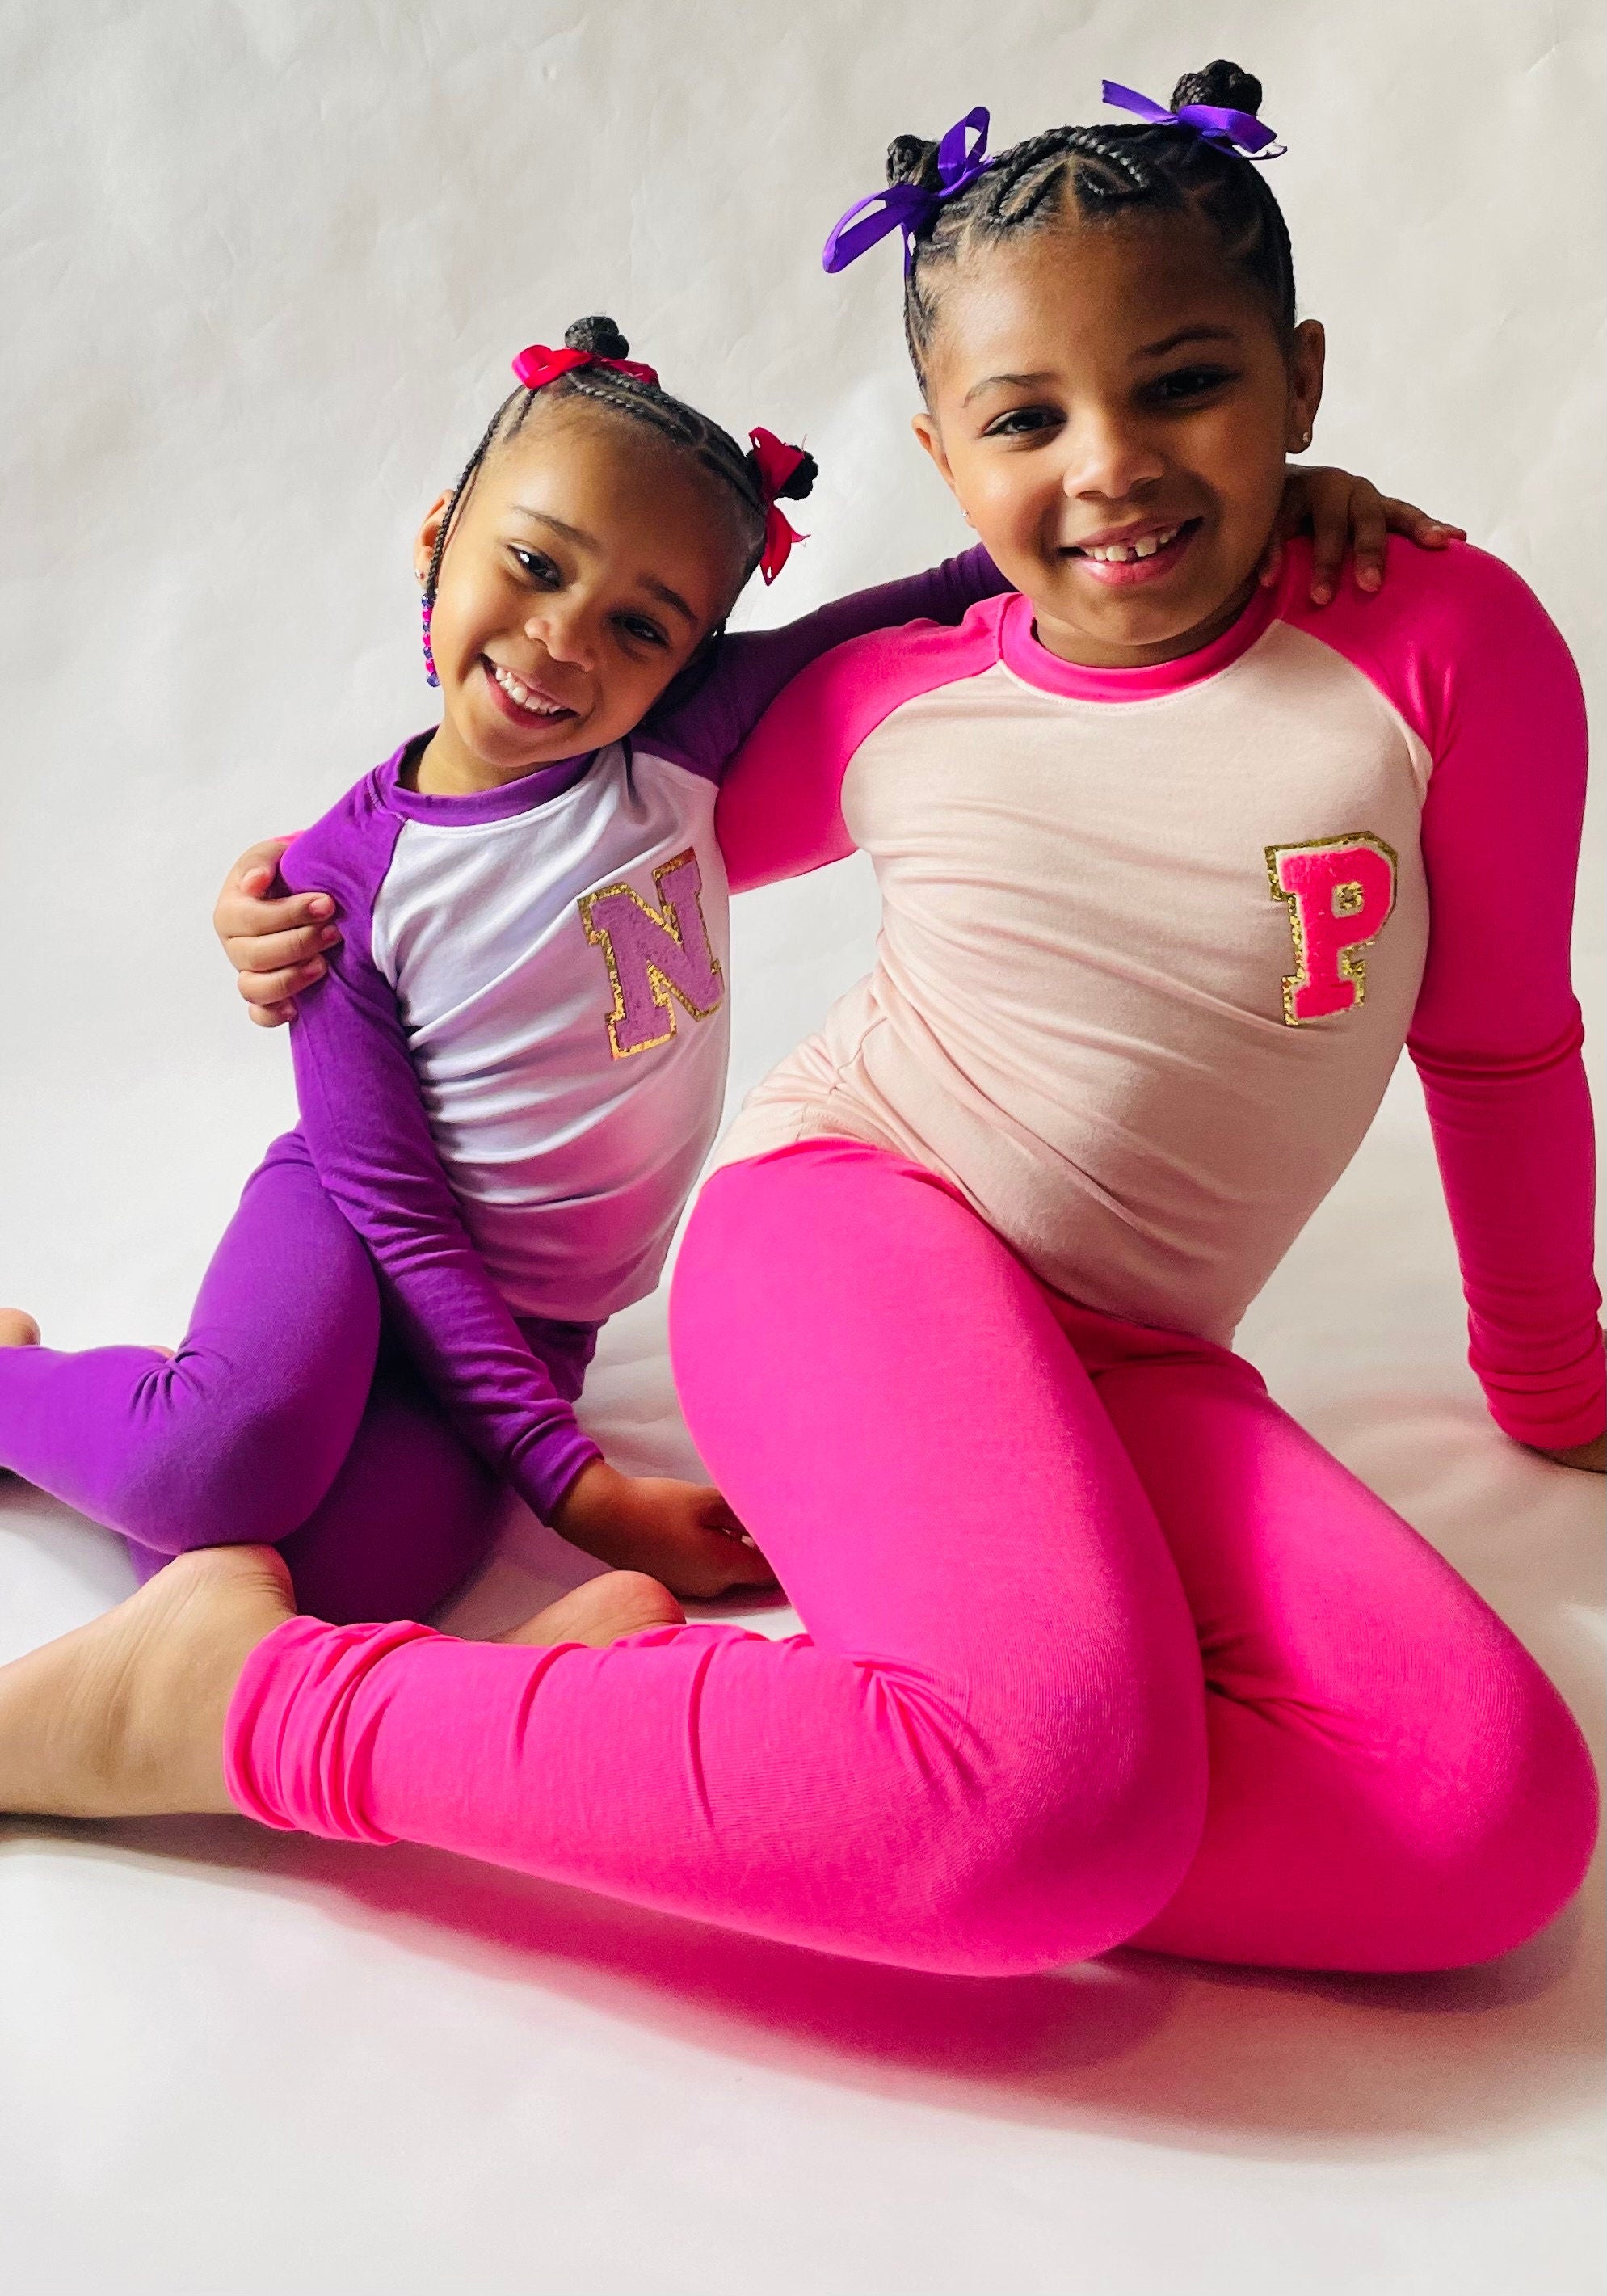 Kids Personalized Pajamas for Girls and Boys| Toddler Pajamas| Youth Pajamas| Birthday Gift| Slumber Party| Unisex| Pink| Purple| Initial